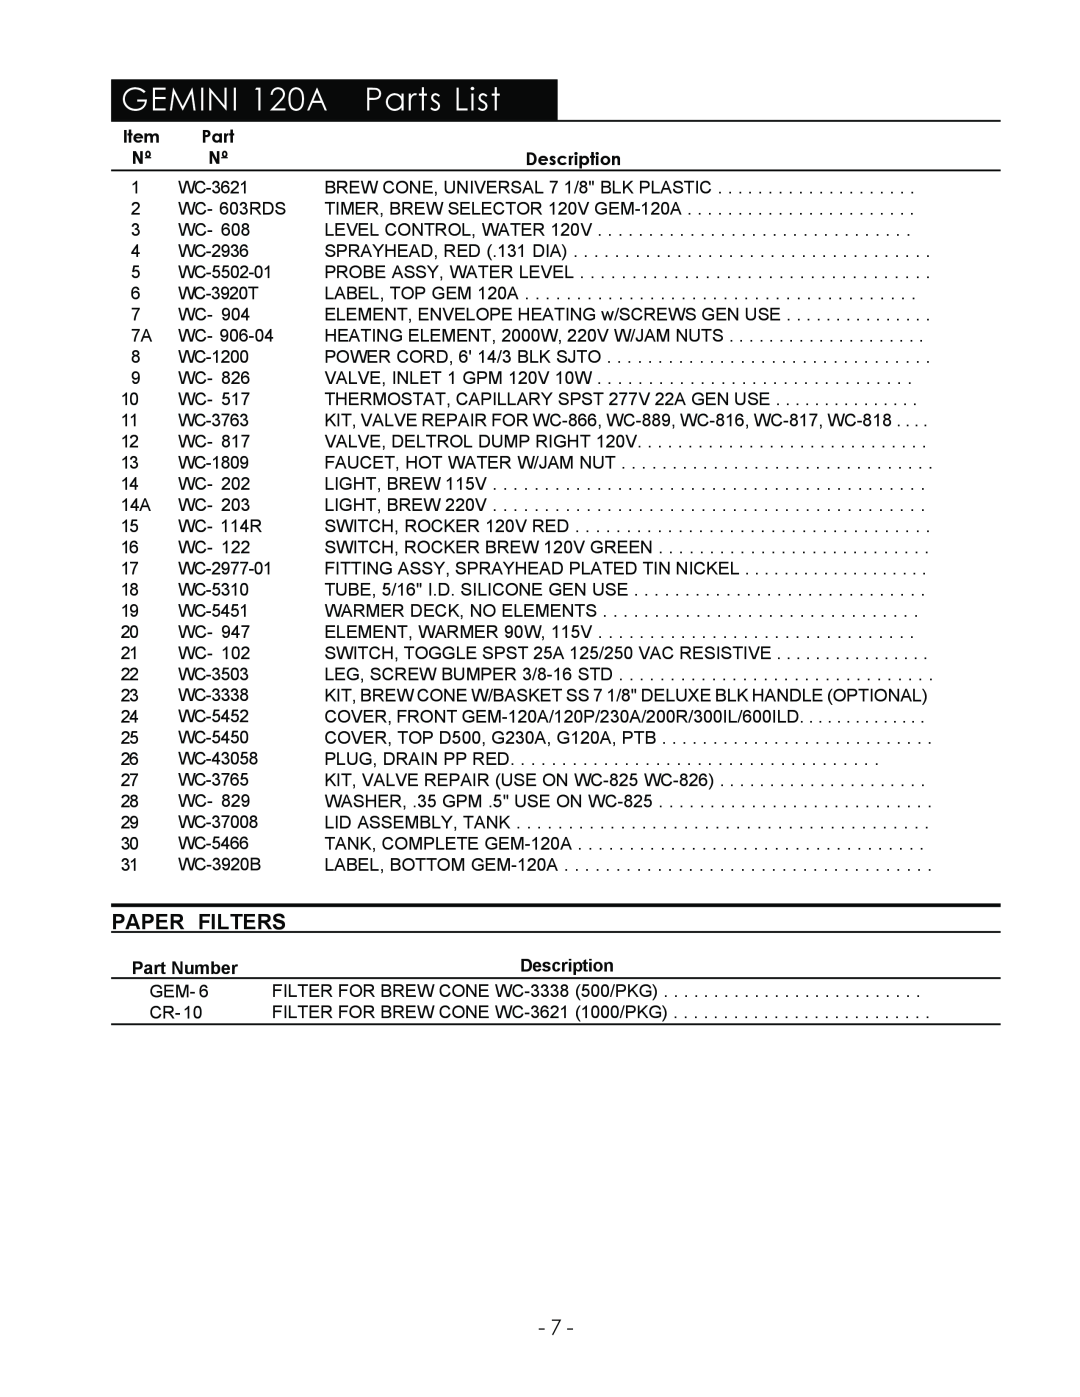 Wibur Curtis Company CA 90640 warranty GEMINI 120A Parts List, Paper Filters, Description, Part Number 